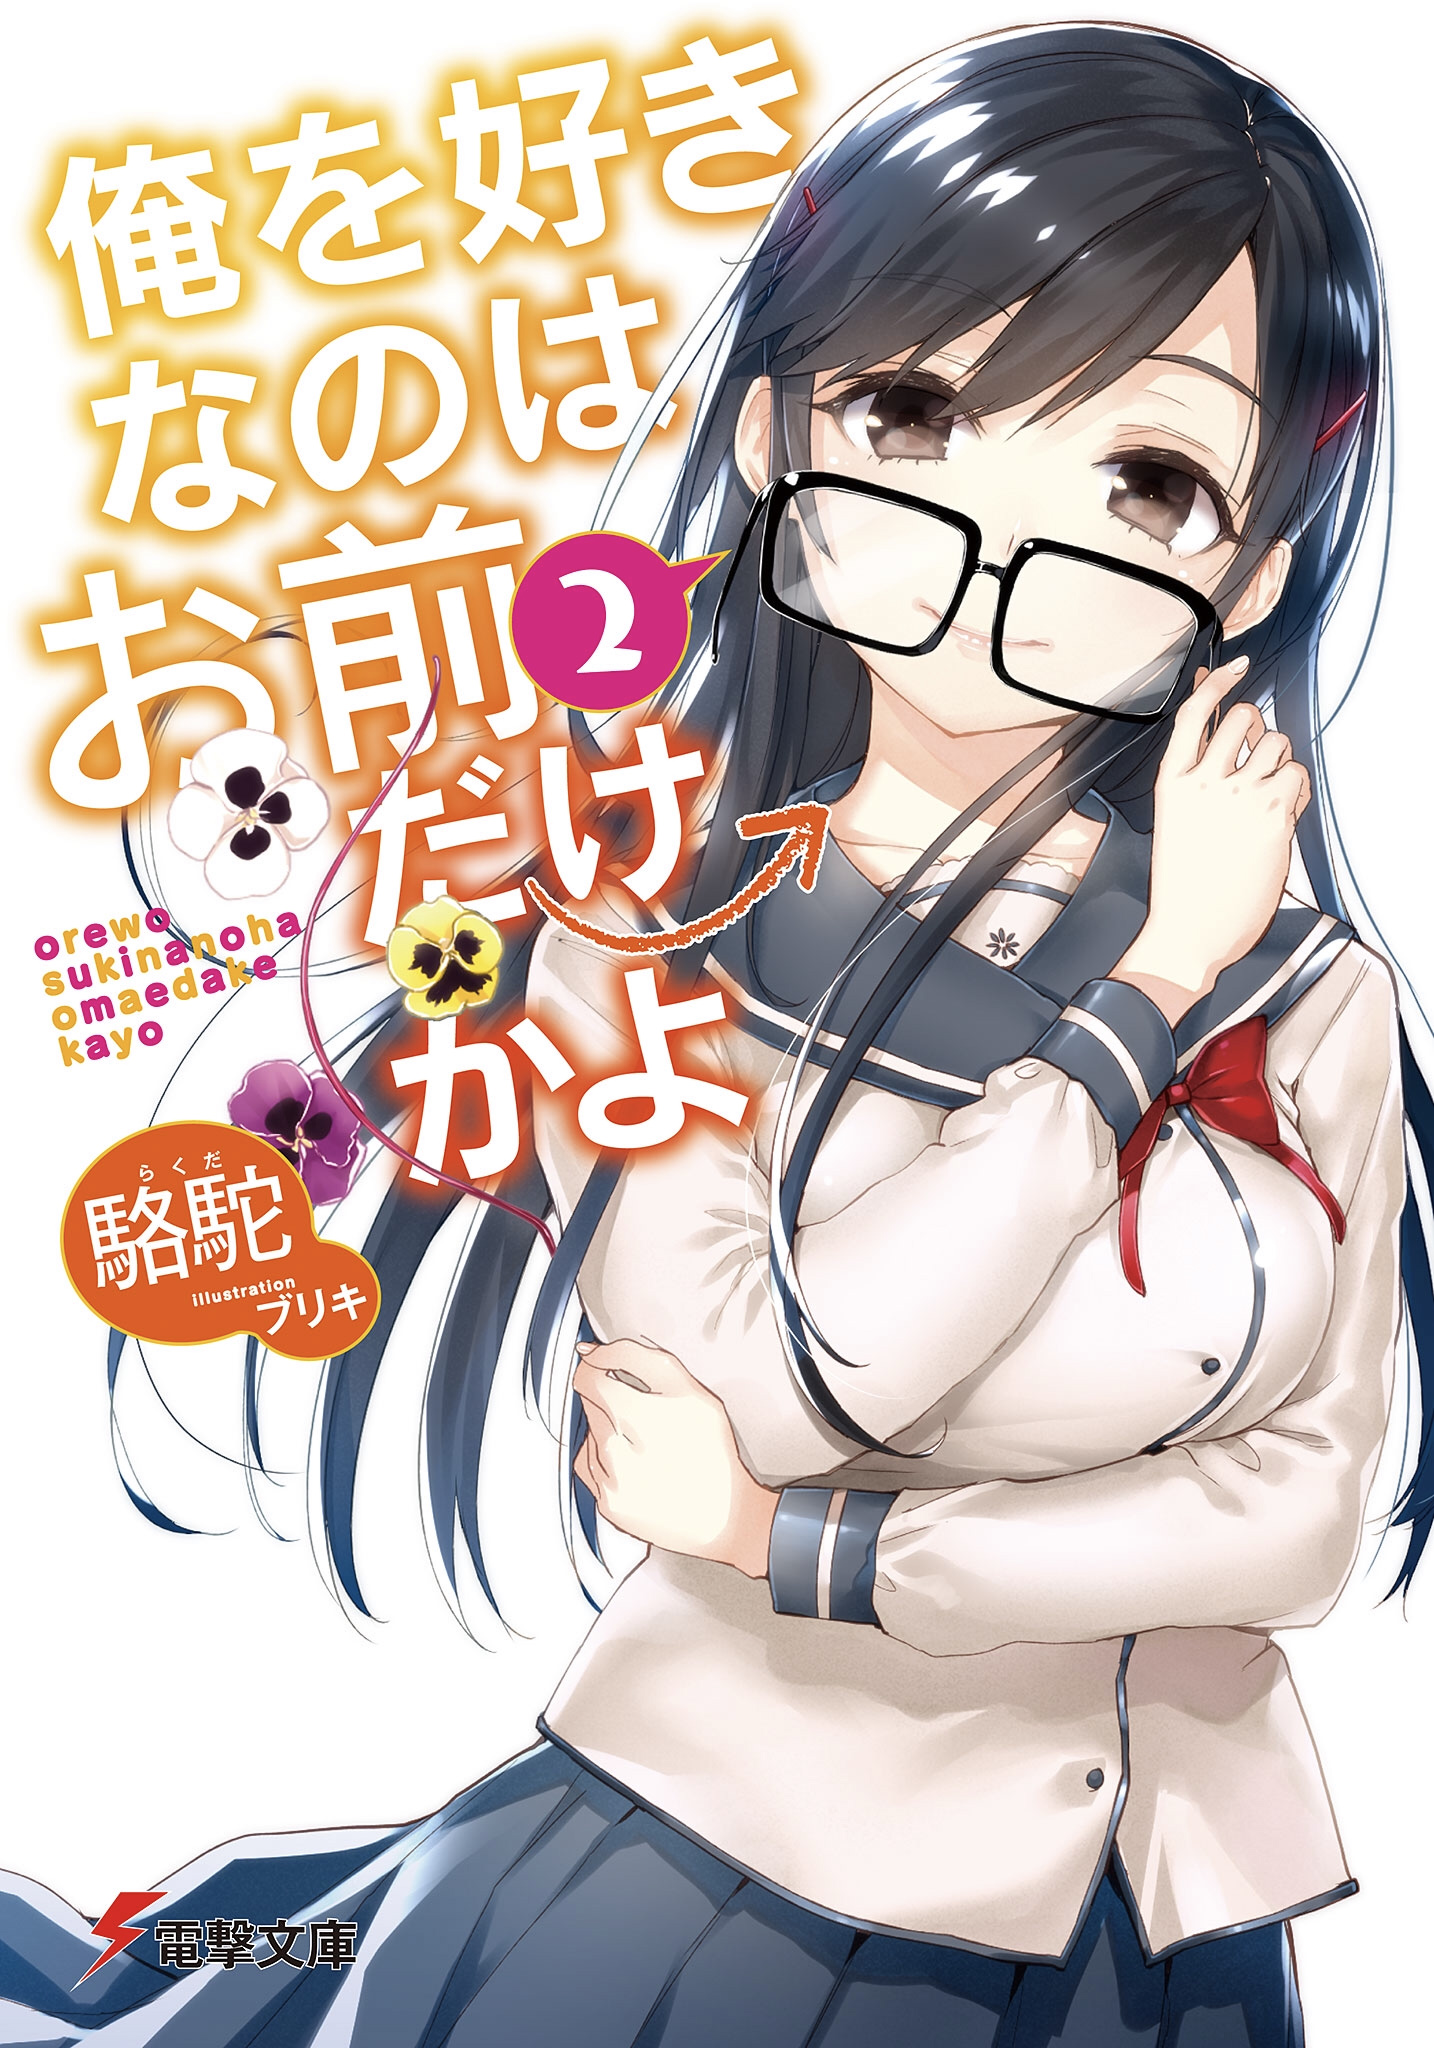 Ore wo Suki nano wa Omae Dake ka yo Light Novels Get TV Anime - News - Anime  News Network